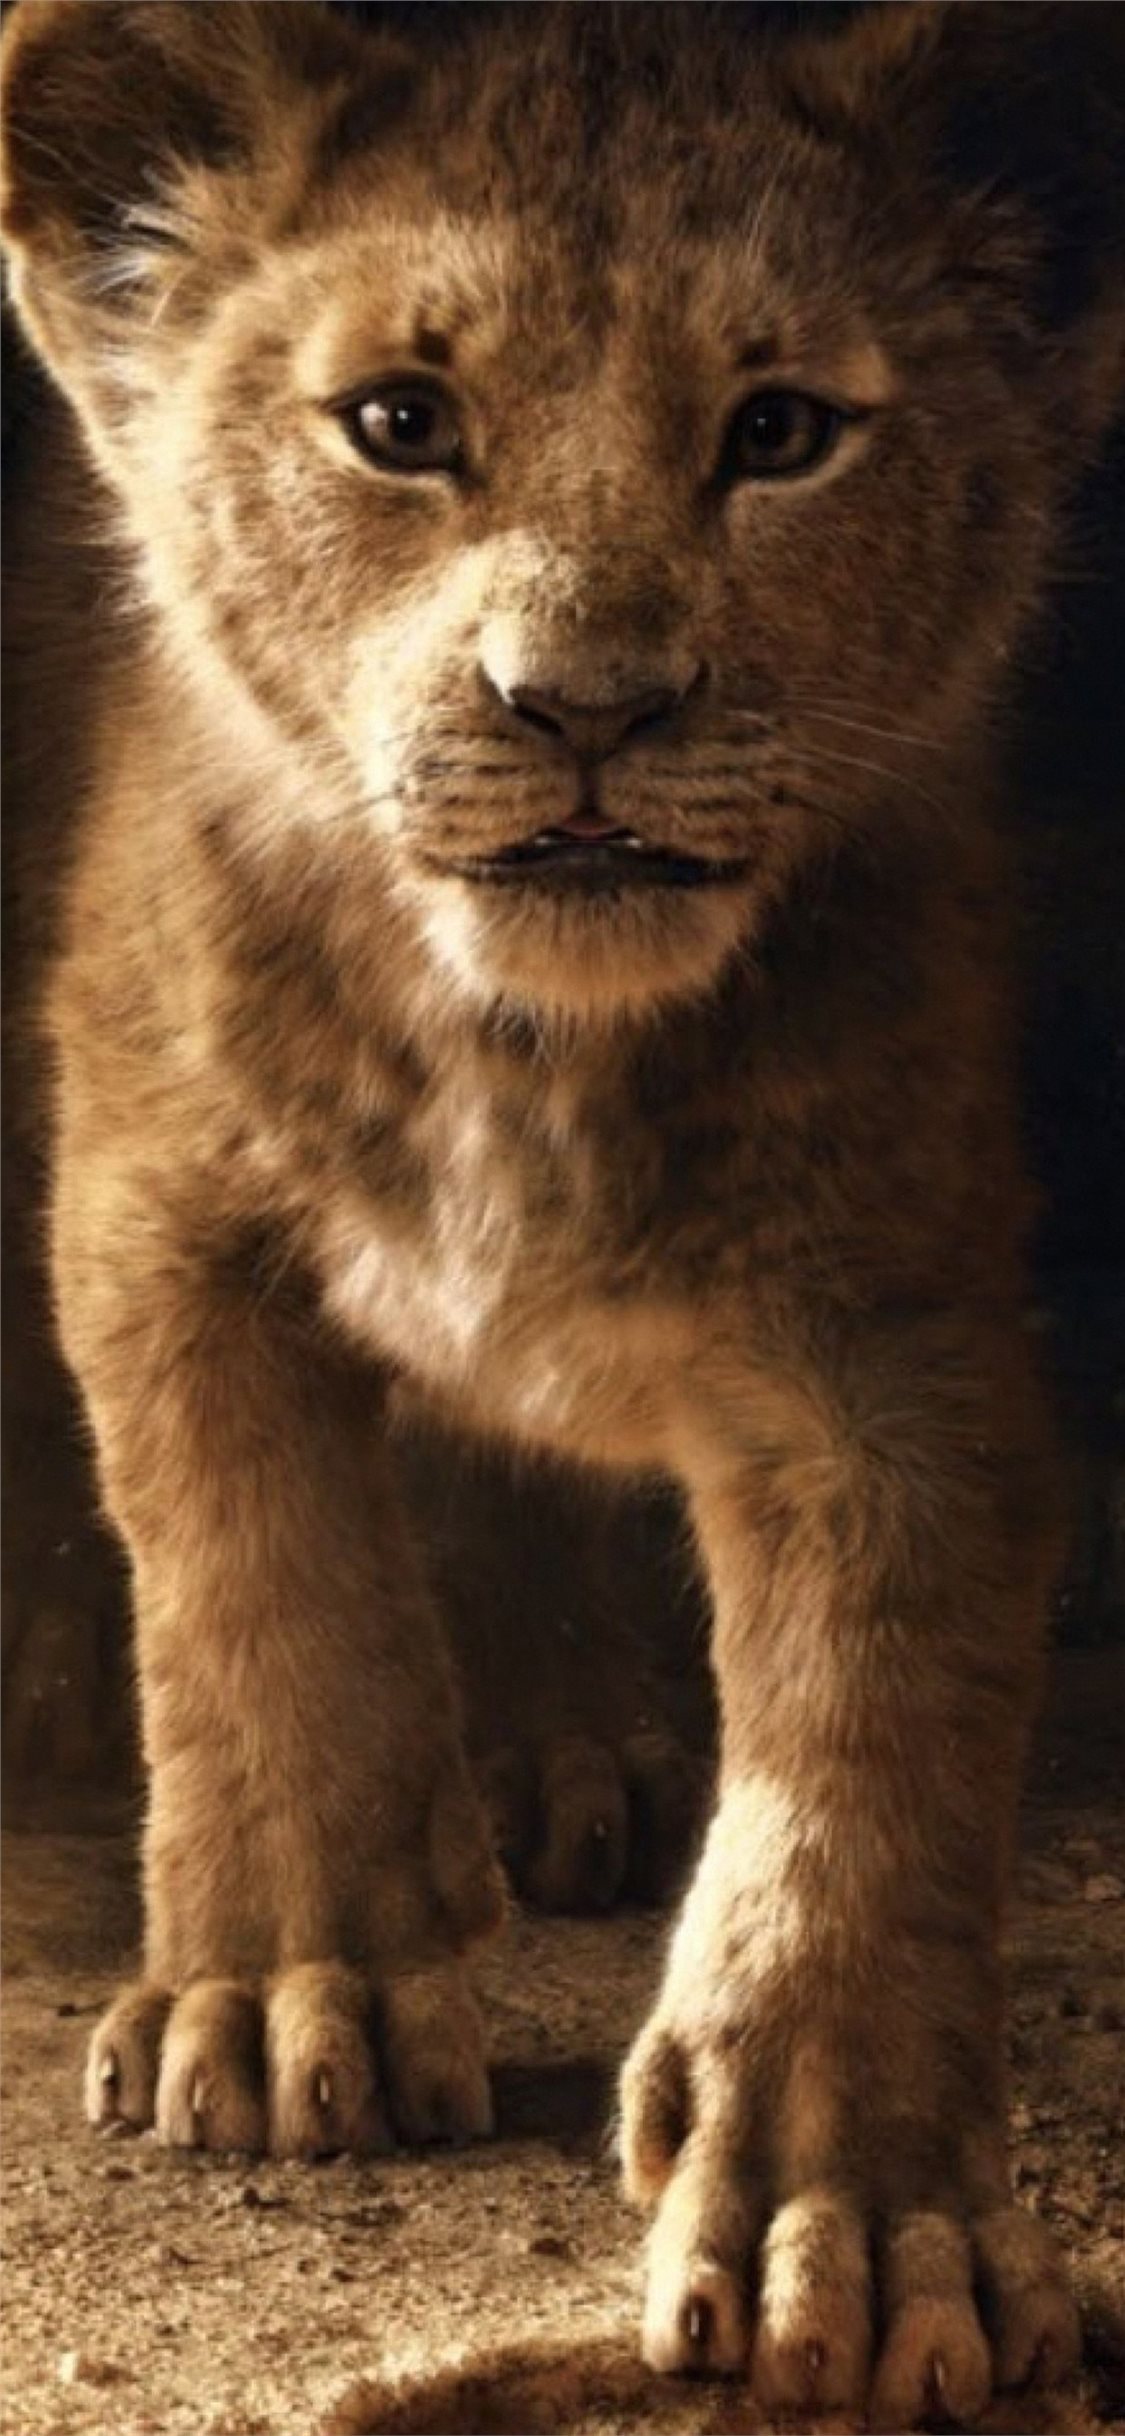 The Lion King Simba 4k iPhone X Wallpaper